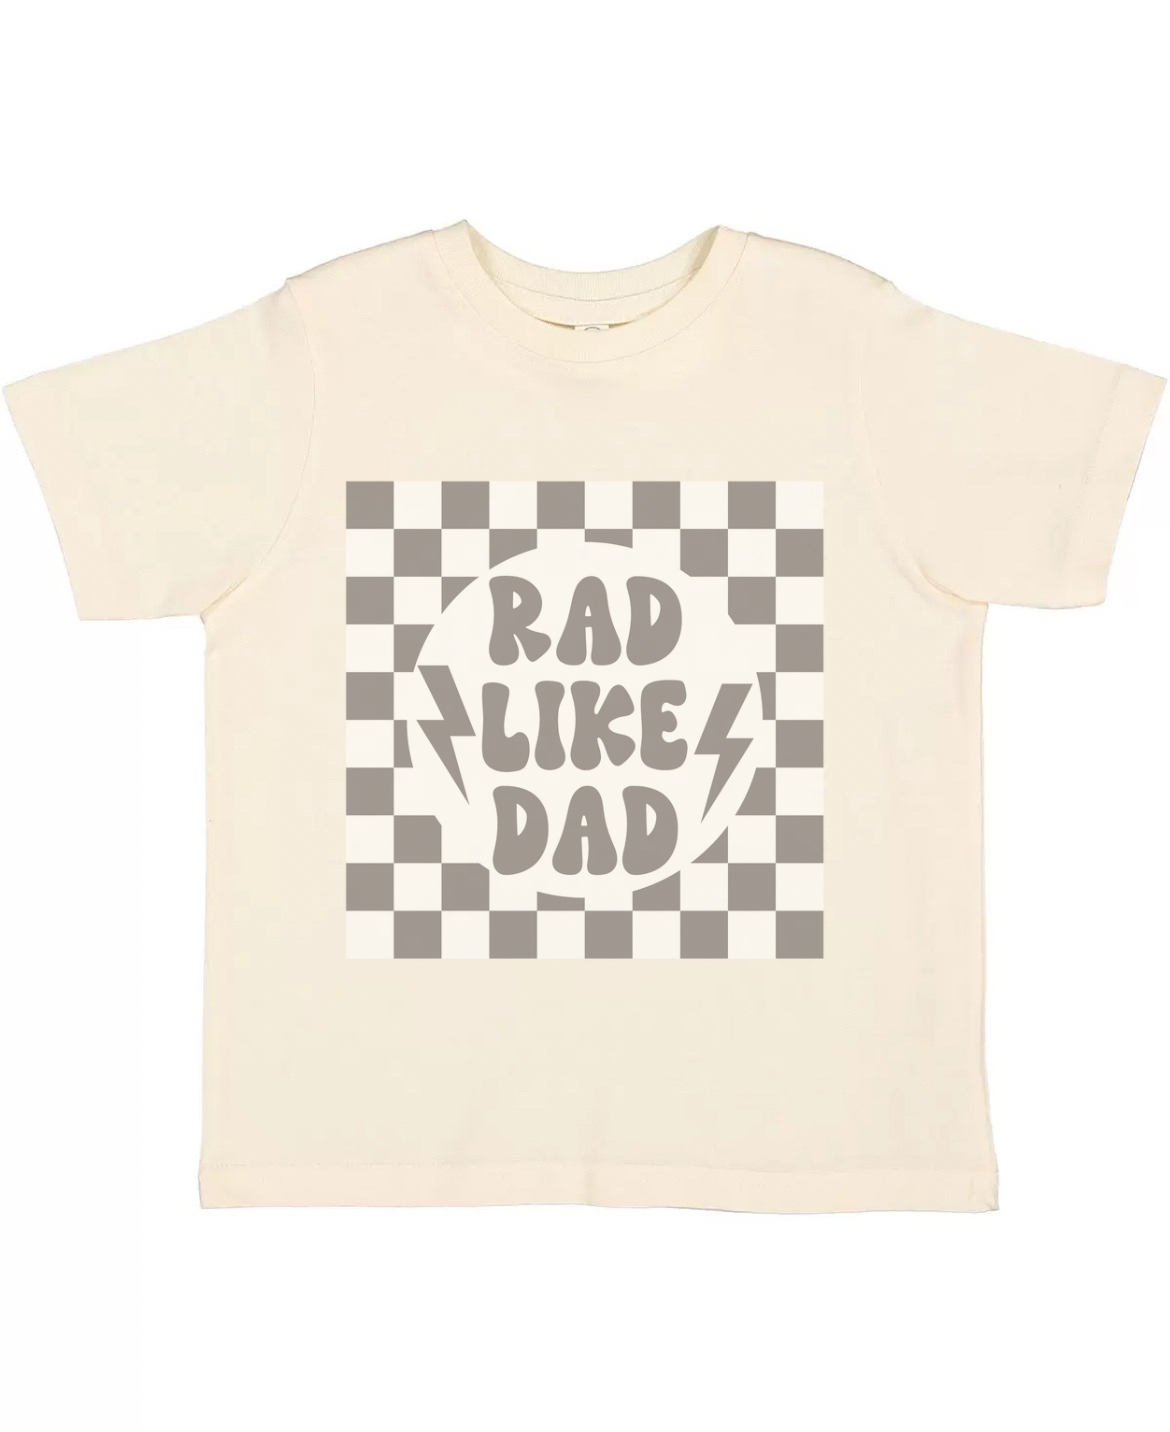 Checkered Rad Like Dad